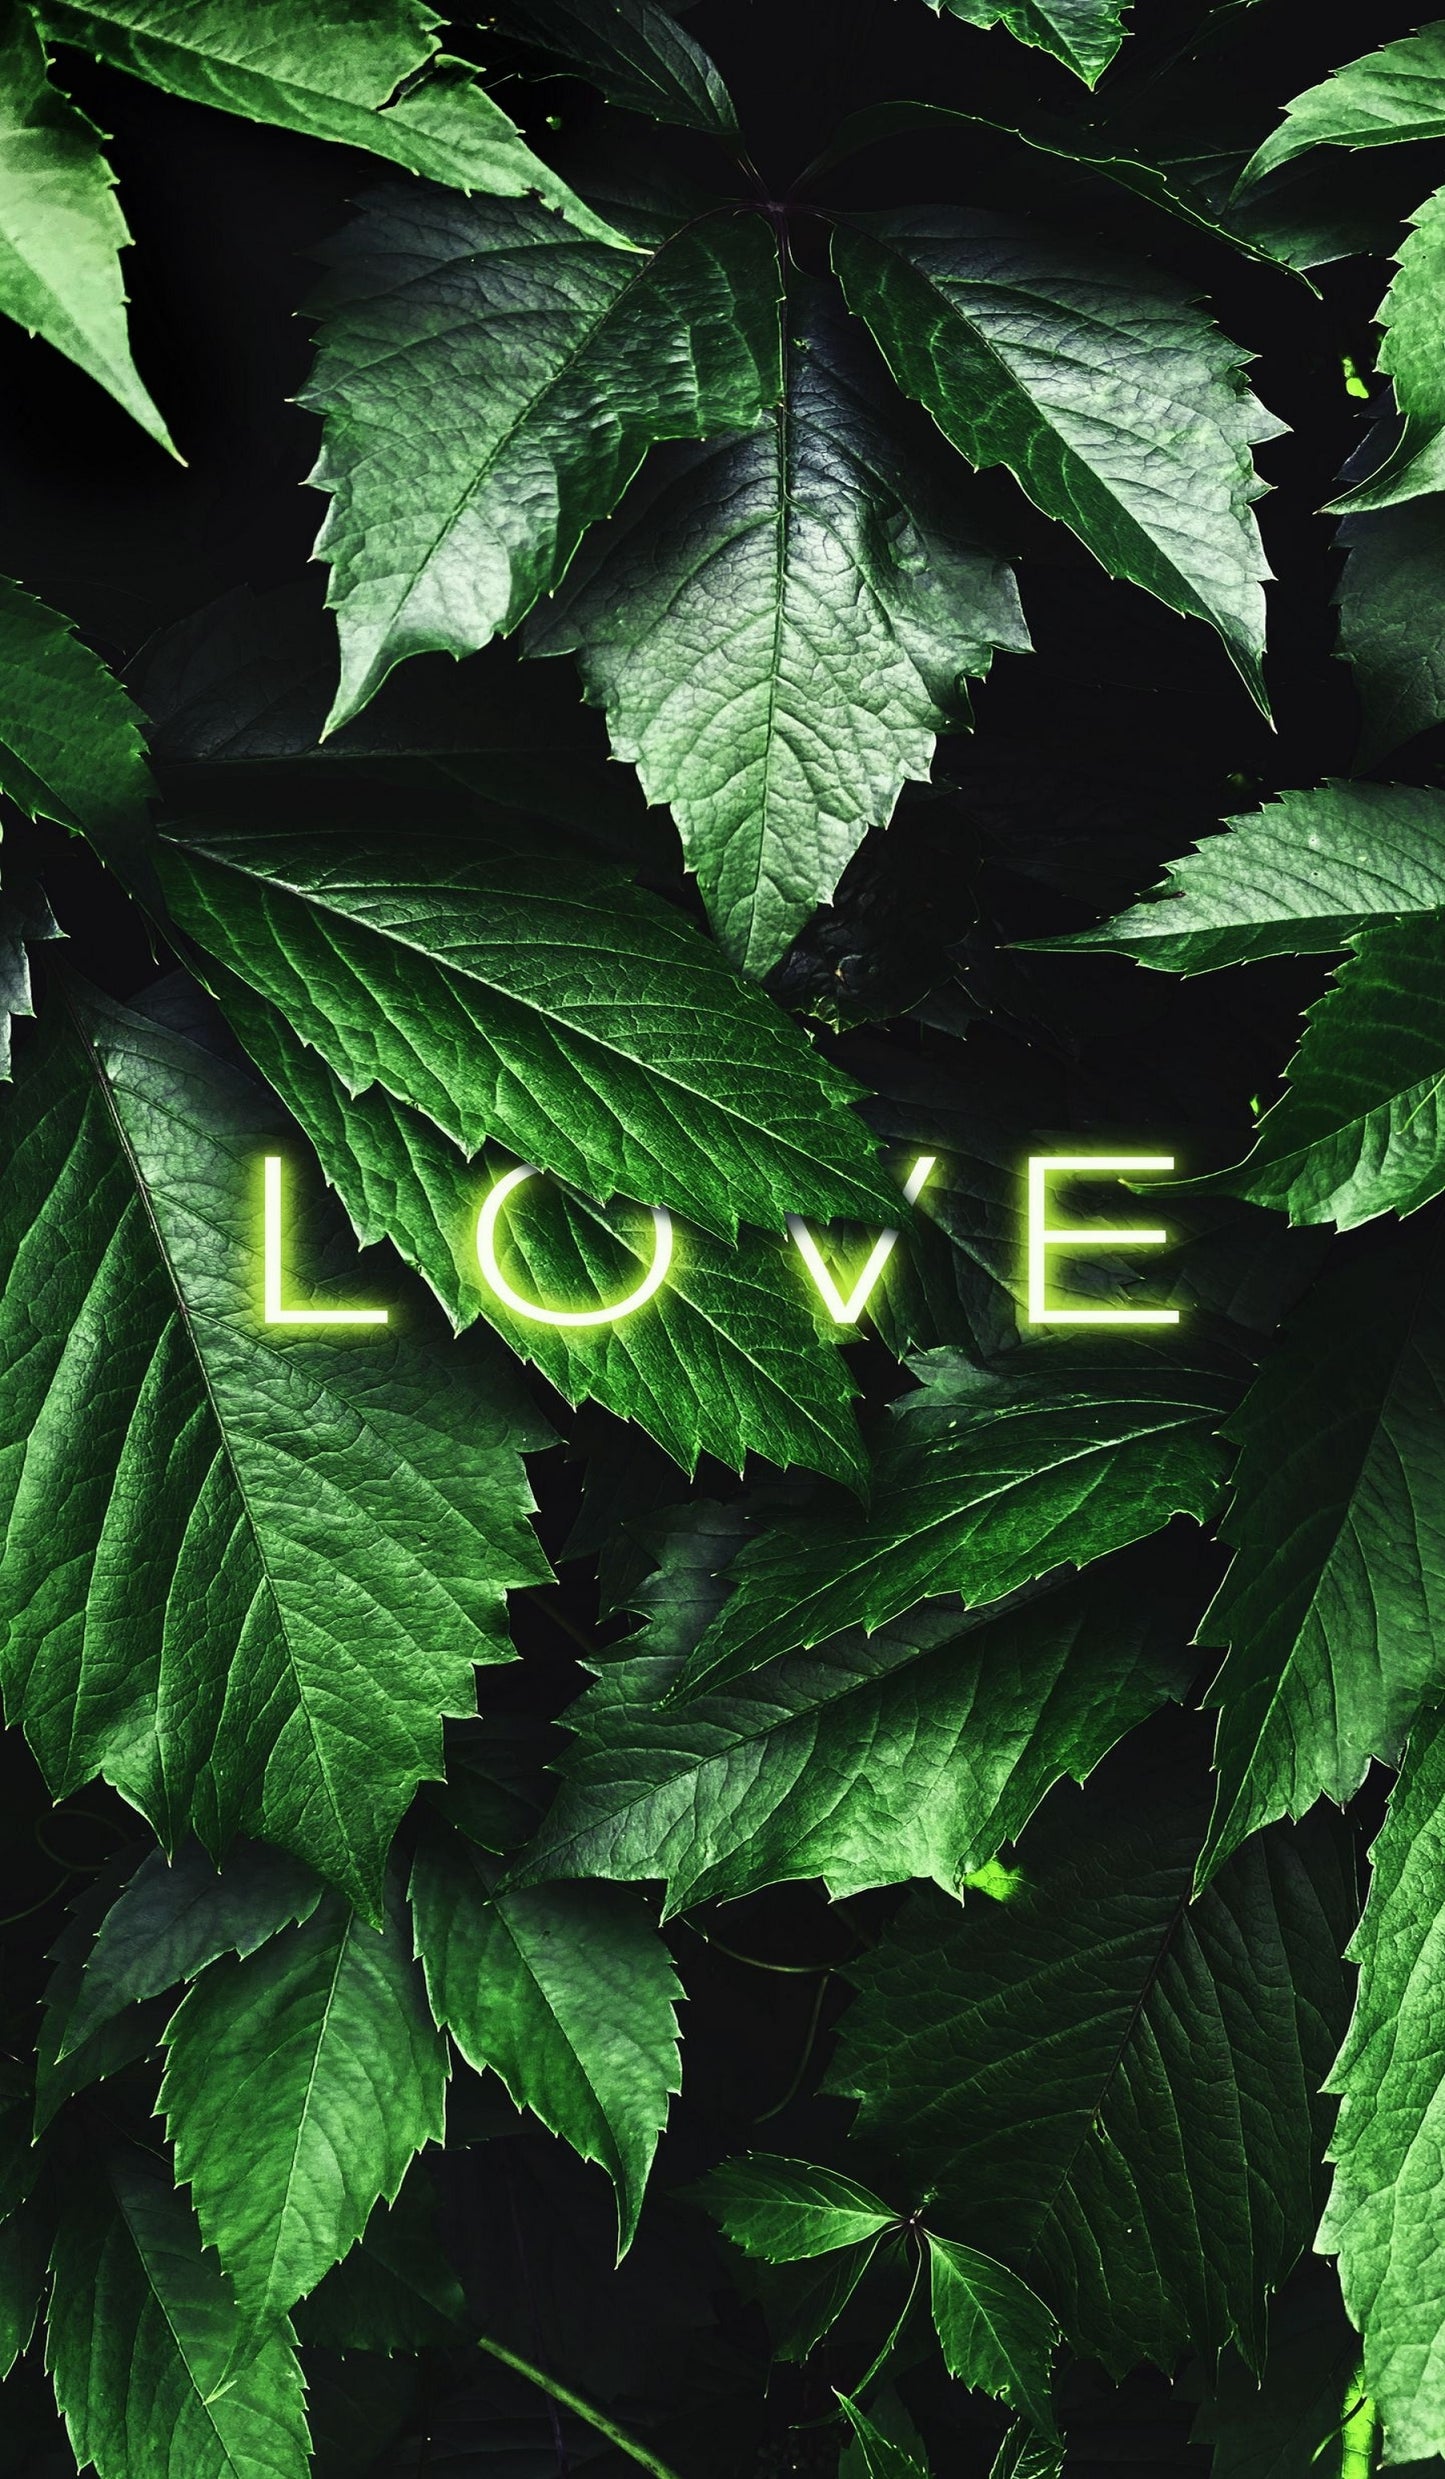 x625 -love-leaf-Botanische grüne Blätter mit Schriftzug Liebe Natur - MEGA XXXL 160X90 CM Leinwandbilder inkl. Holzrahmen